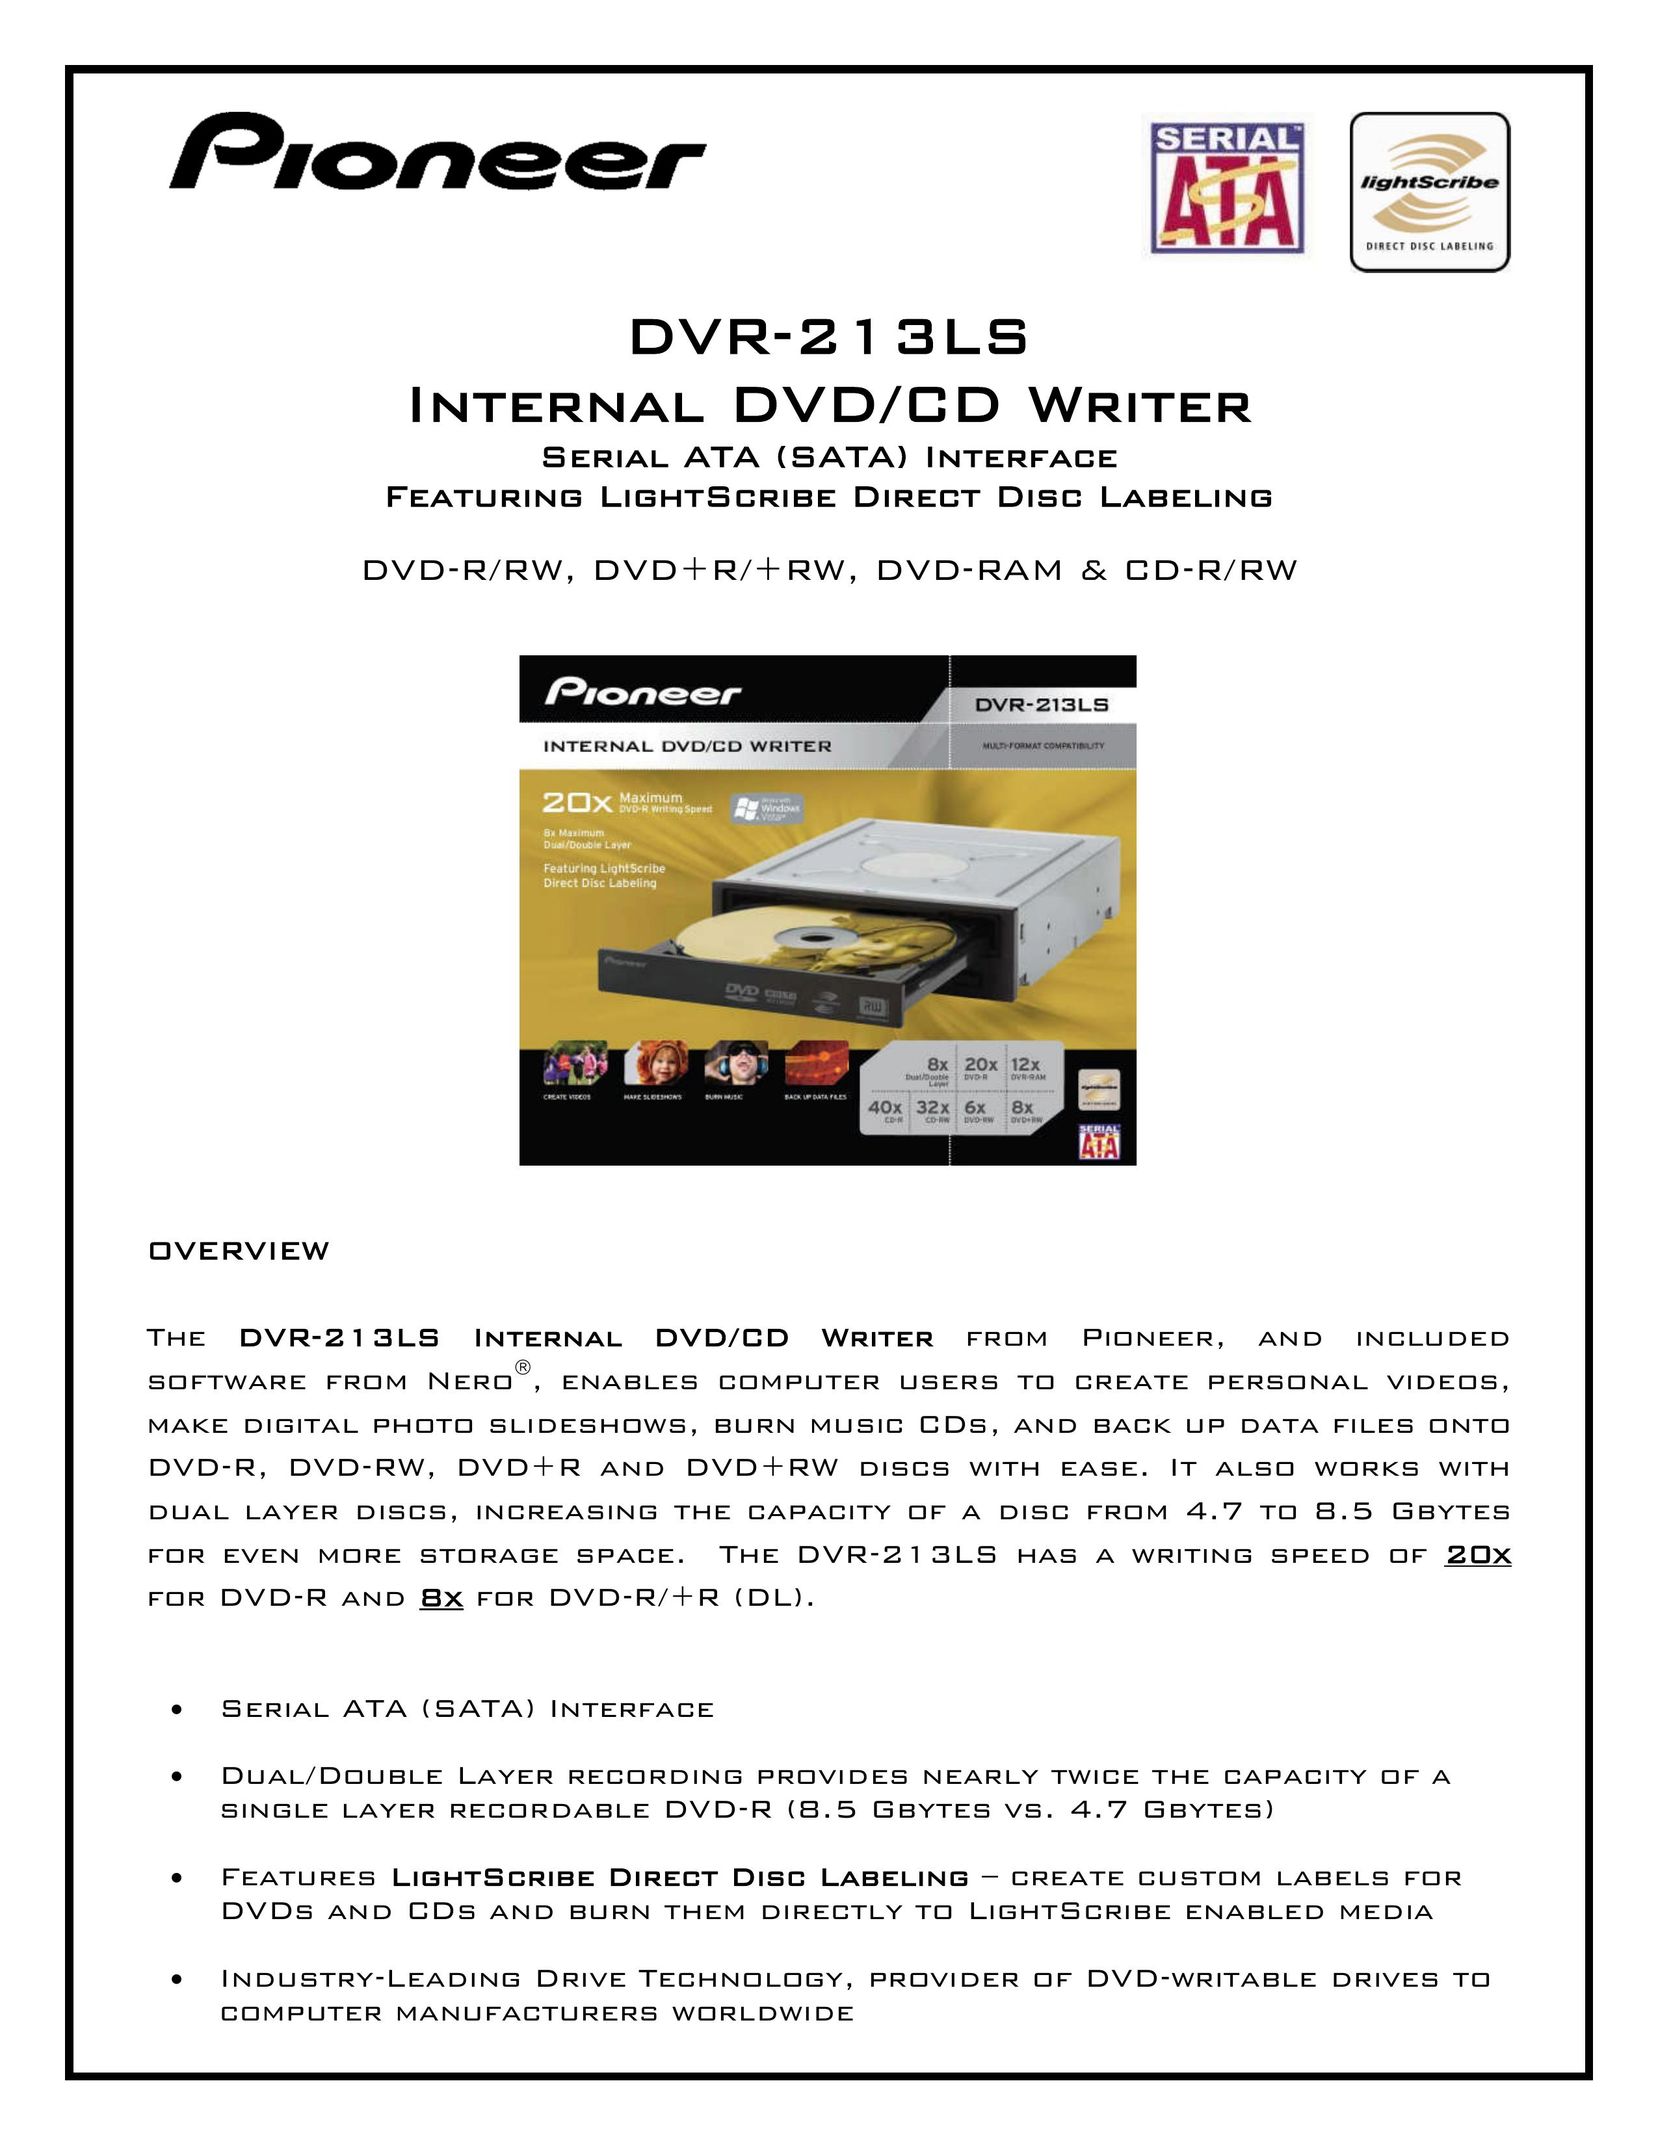 Pioneer DVR-213LS DVD Recorder User Manual